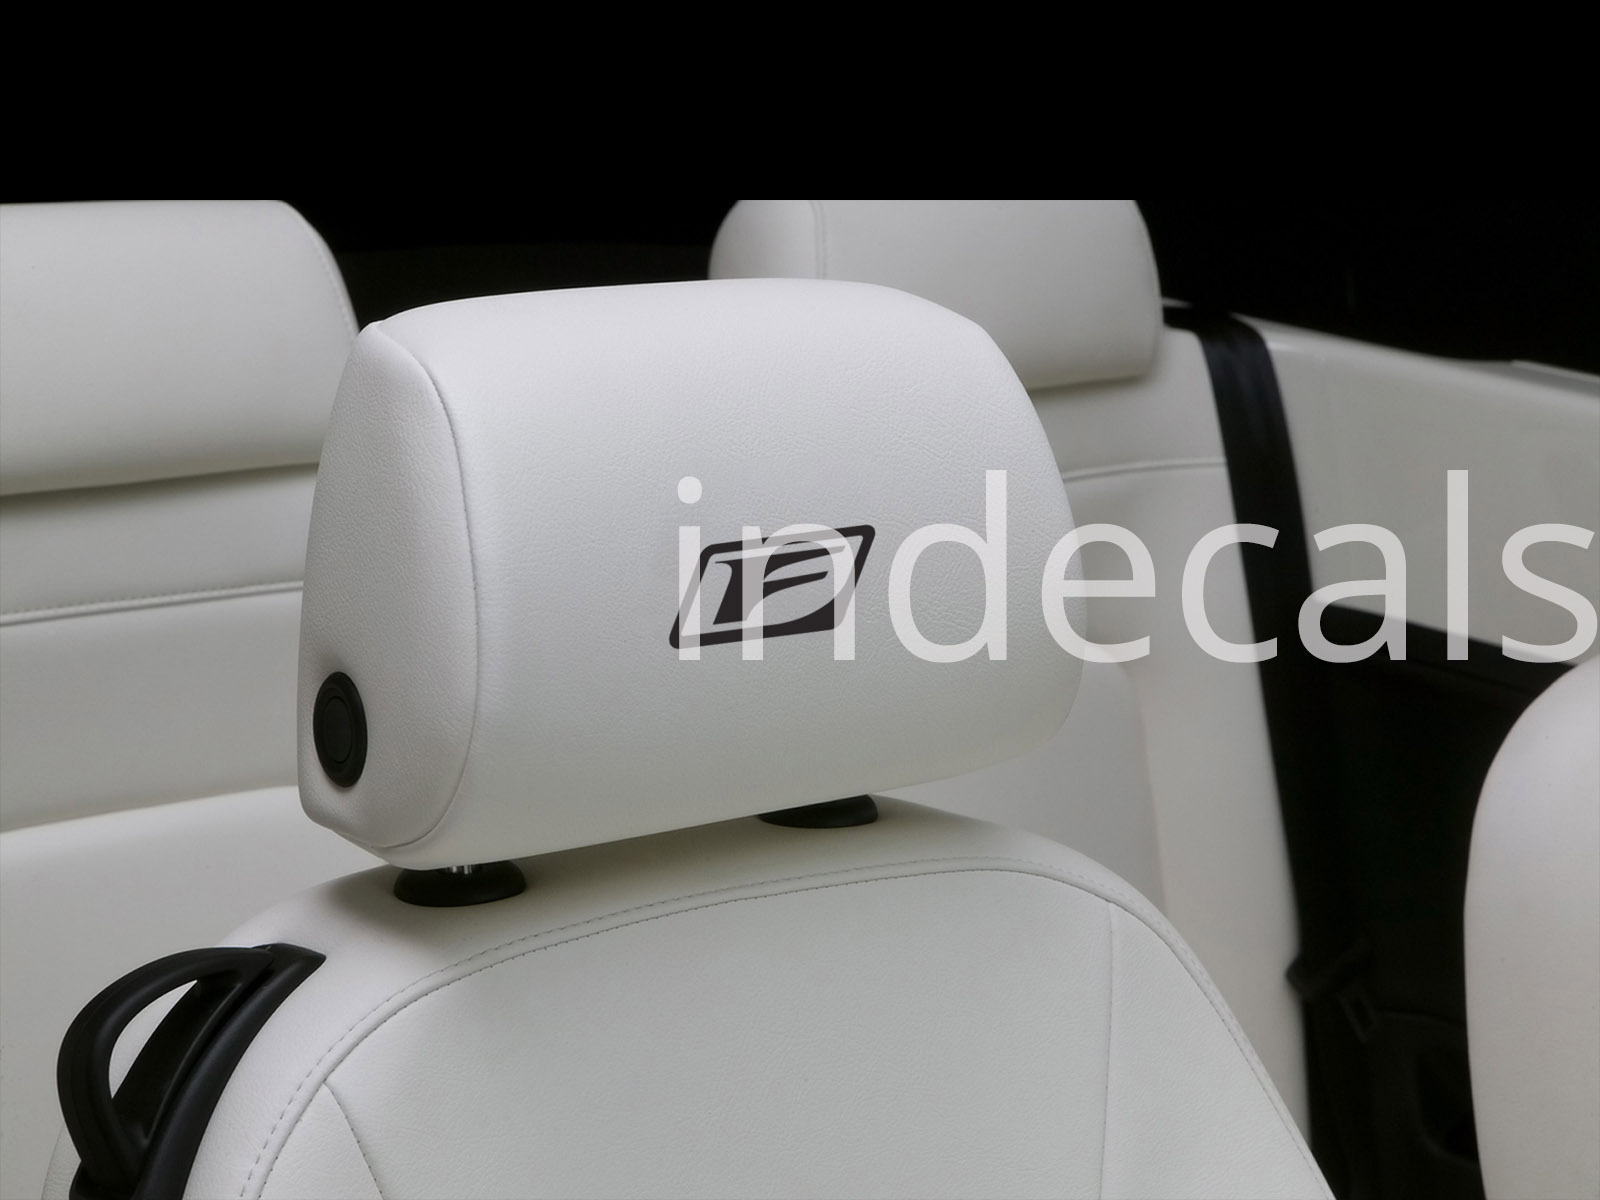 6 x Lexus F-sport Stickers for Headrests - Black